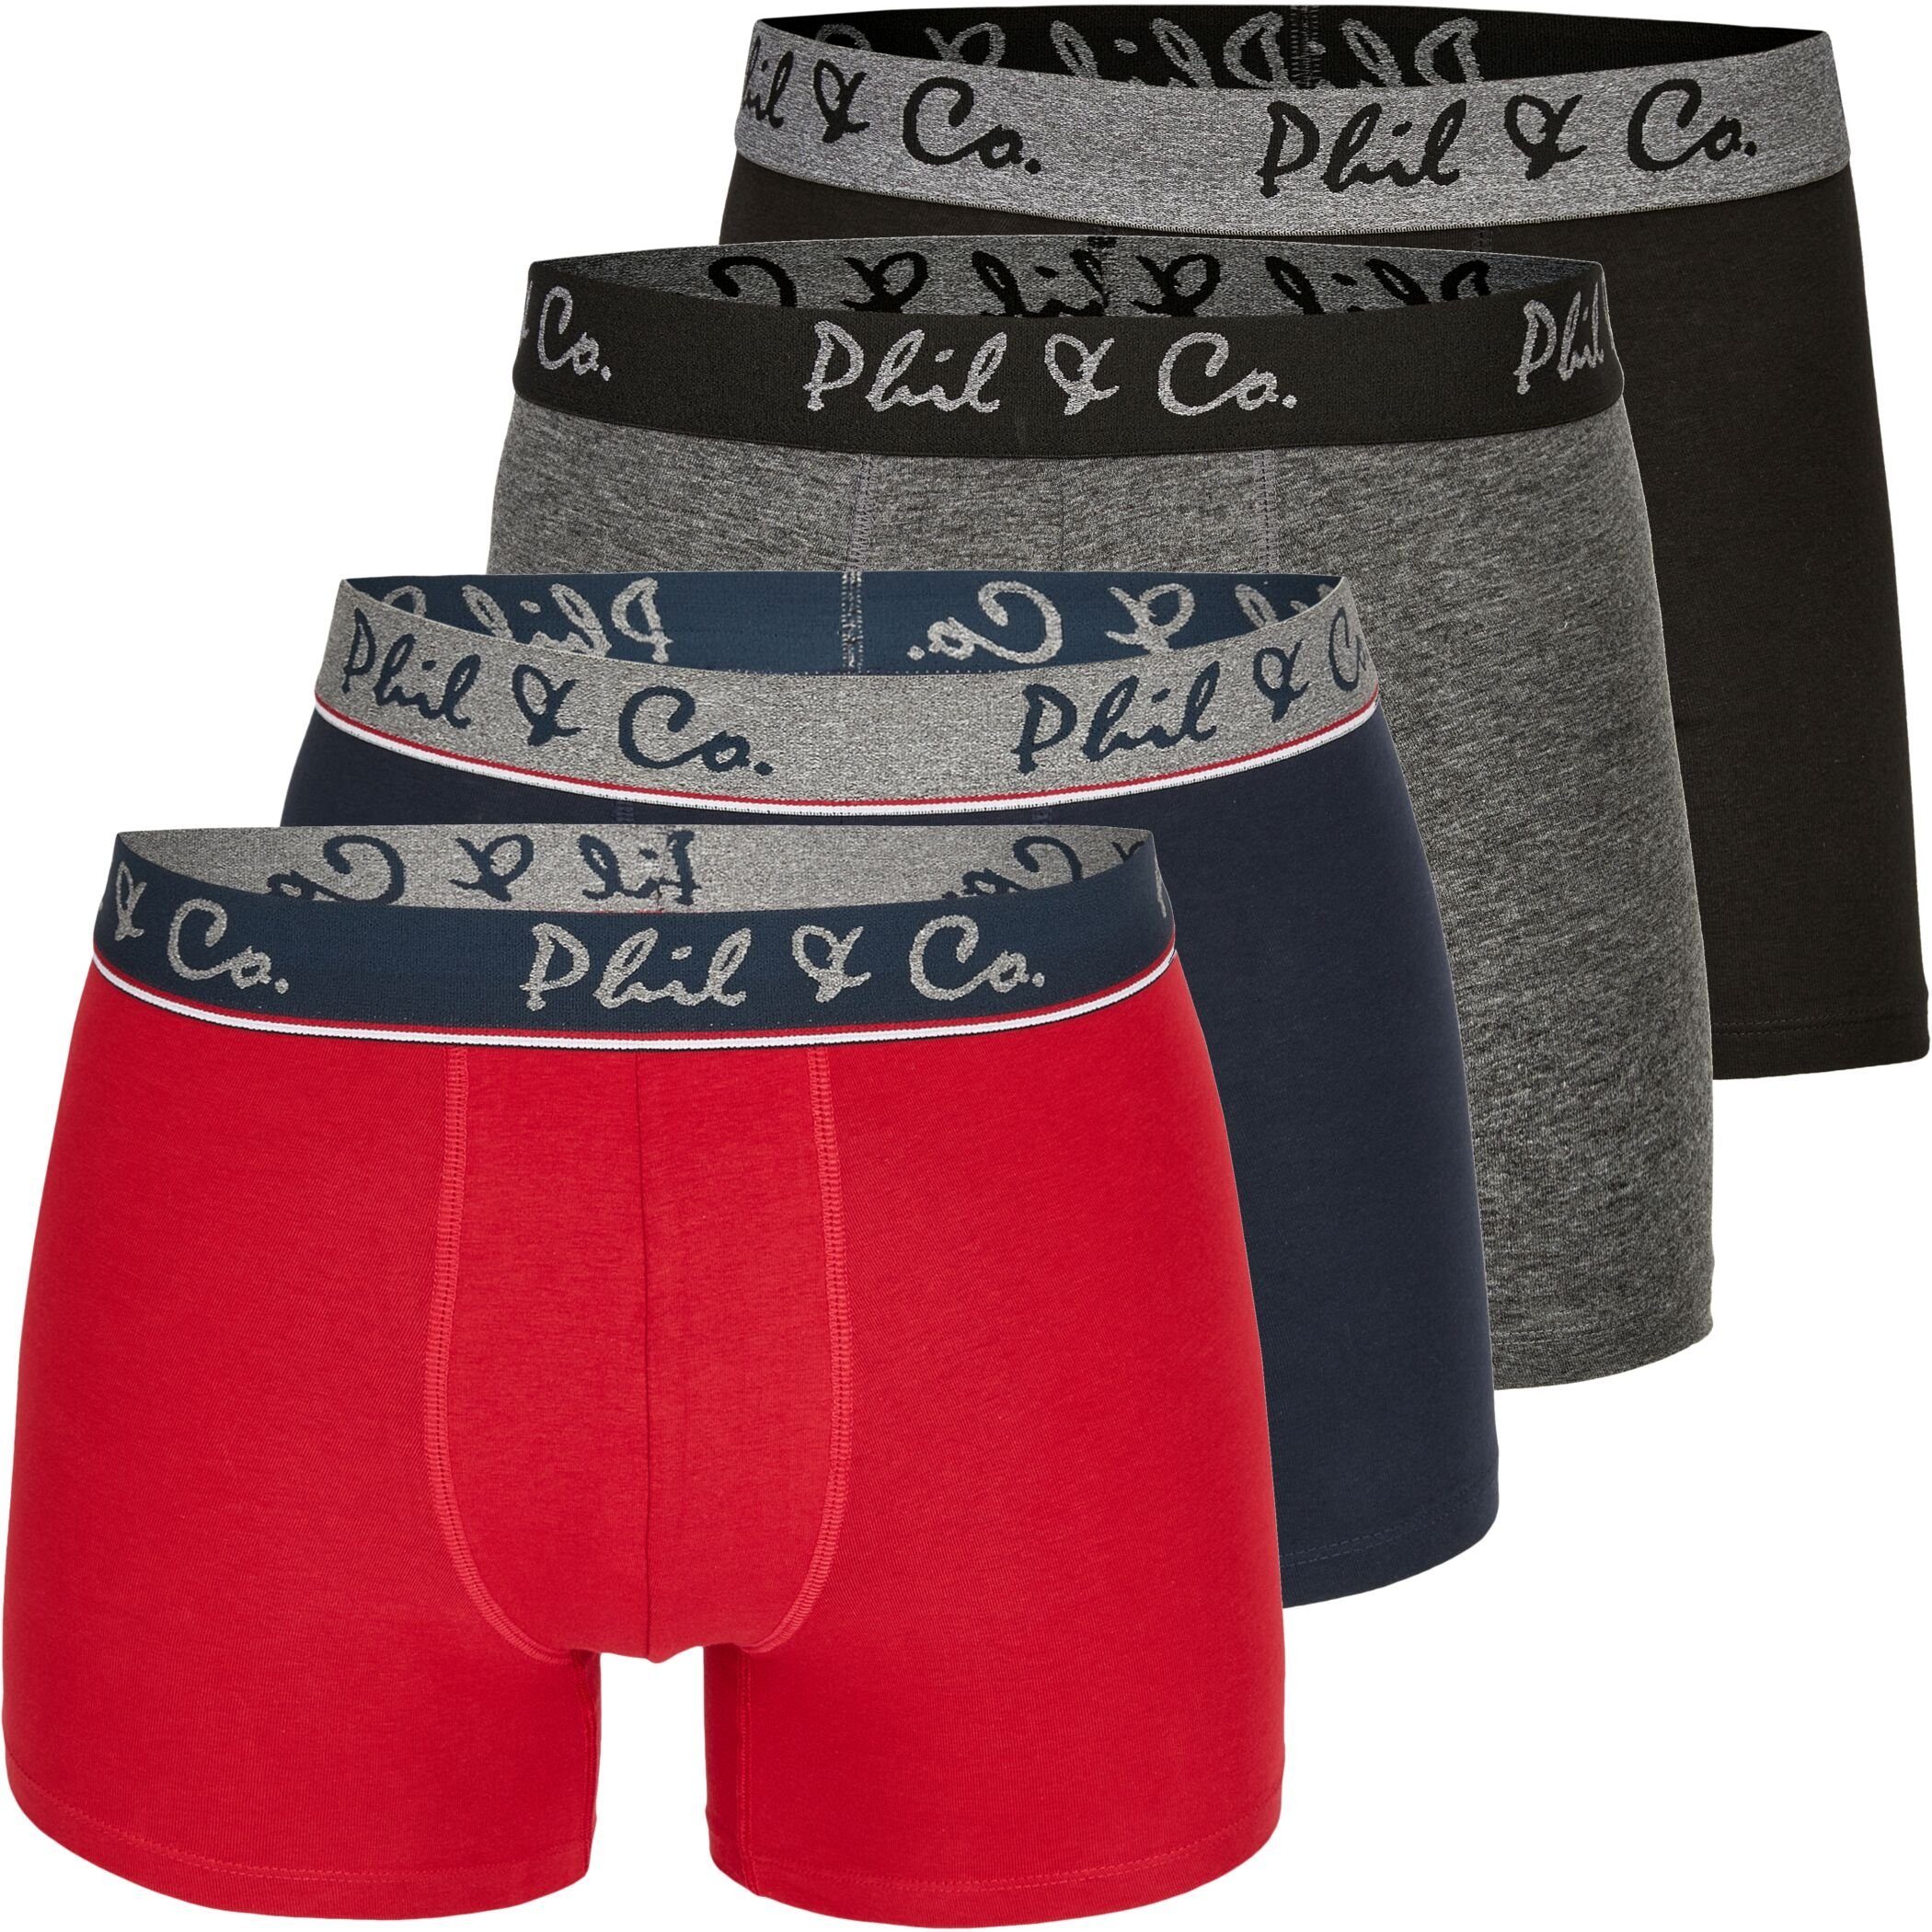 Phil & Co. Boxershorts 4er Pack Phil & Co Berlin Jersey Boxershorts Trunk Short Pant FARBWAHL (1-St) DESIGN 15